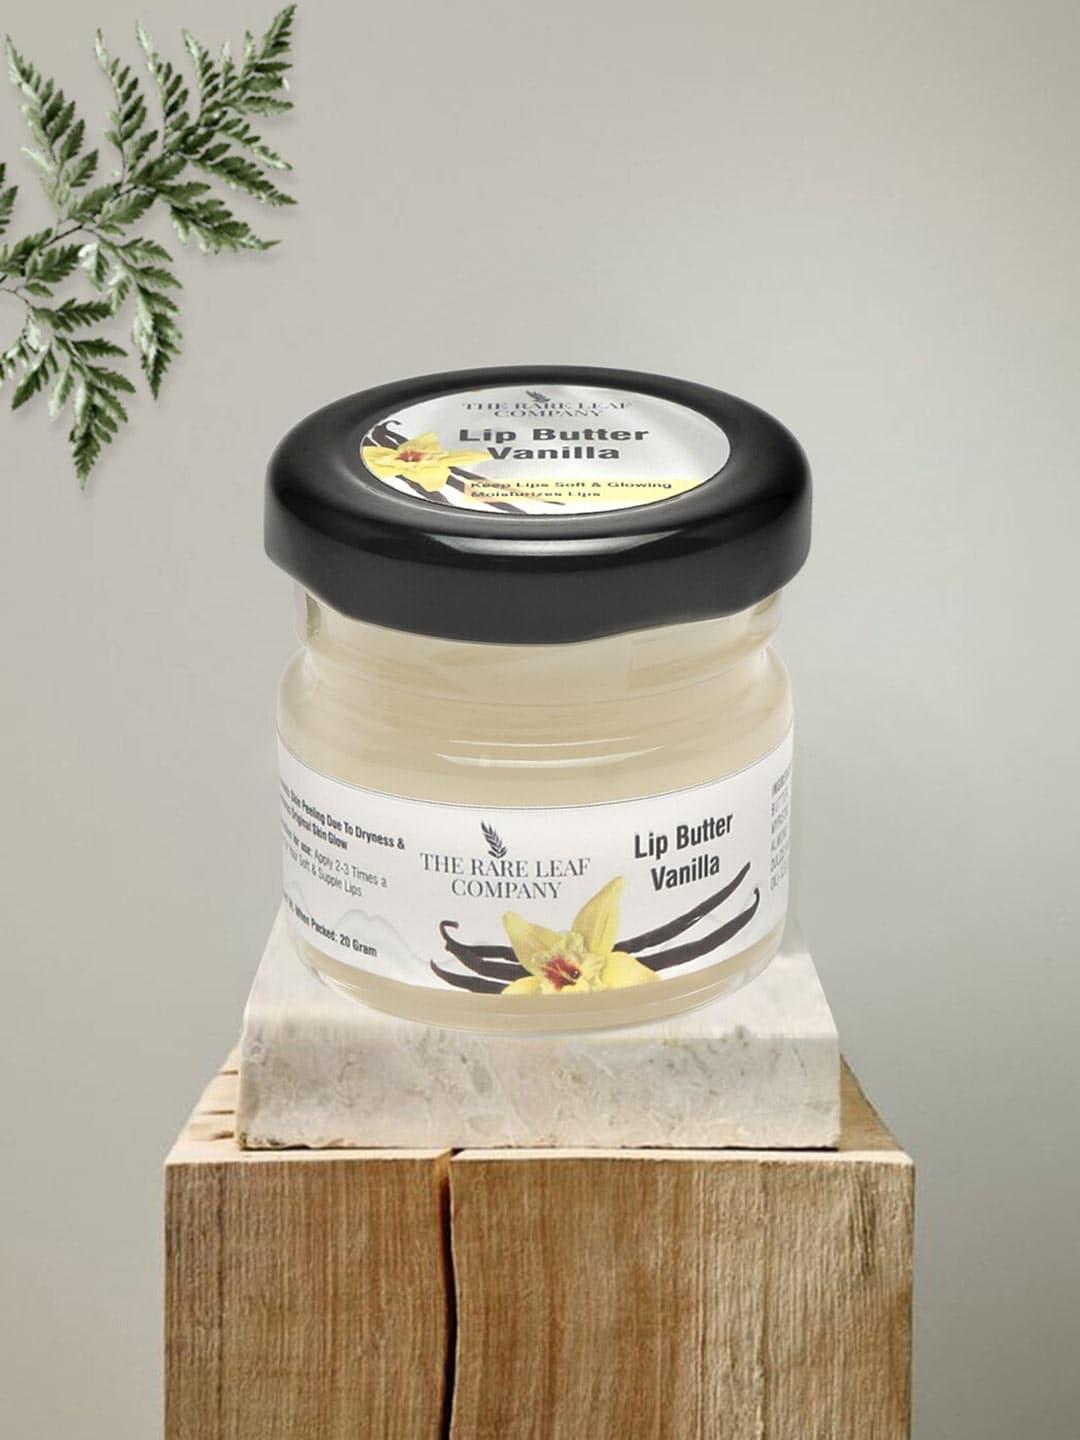 THE RARE LEAF COMPANY Natural UV Protection Lip Butter 20 g - Vanilla